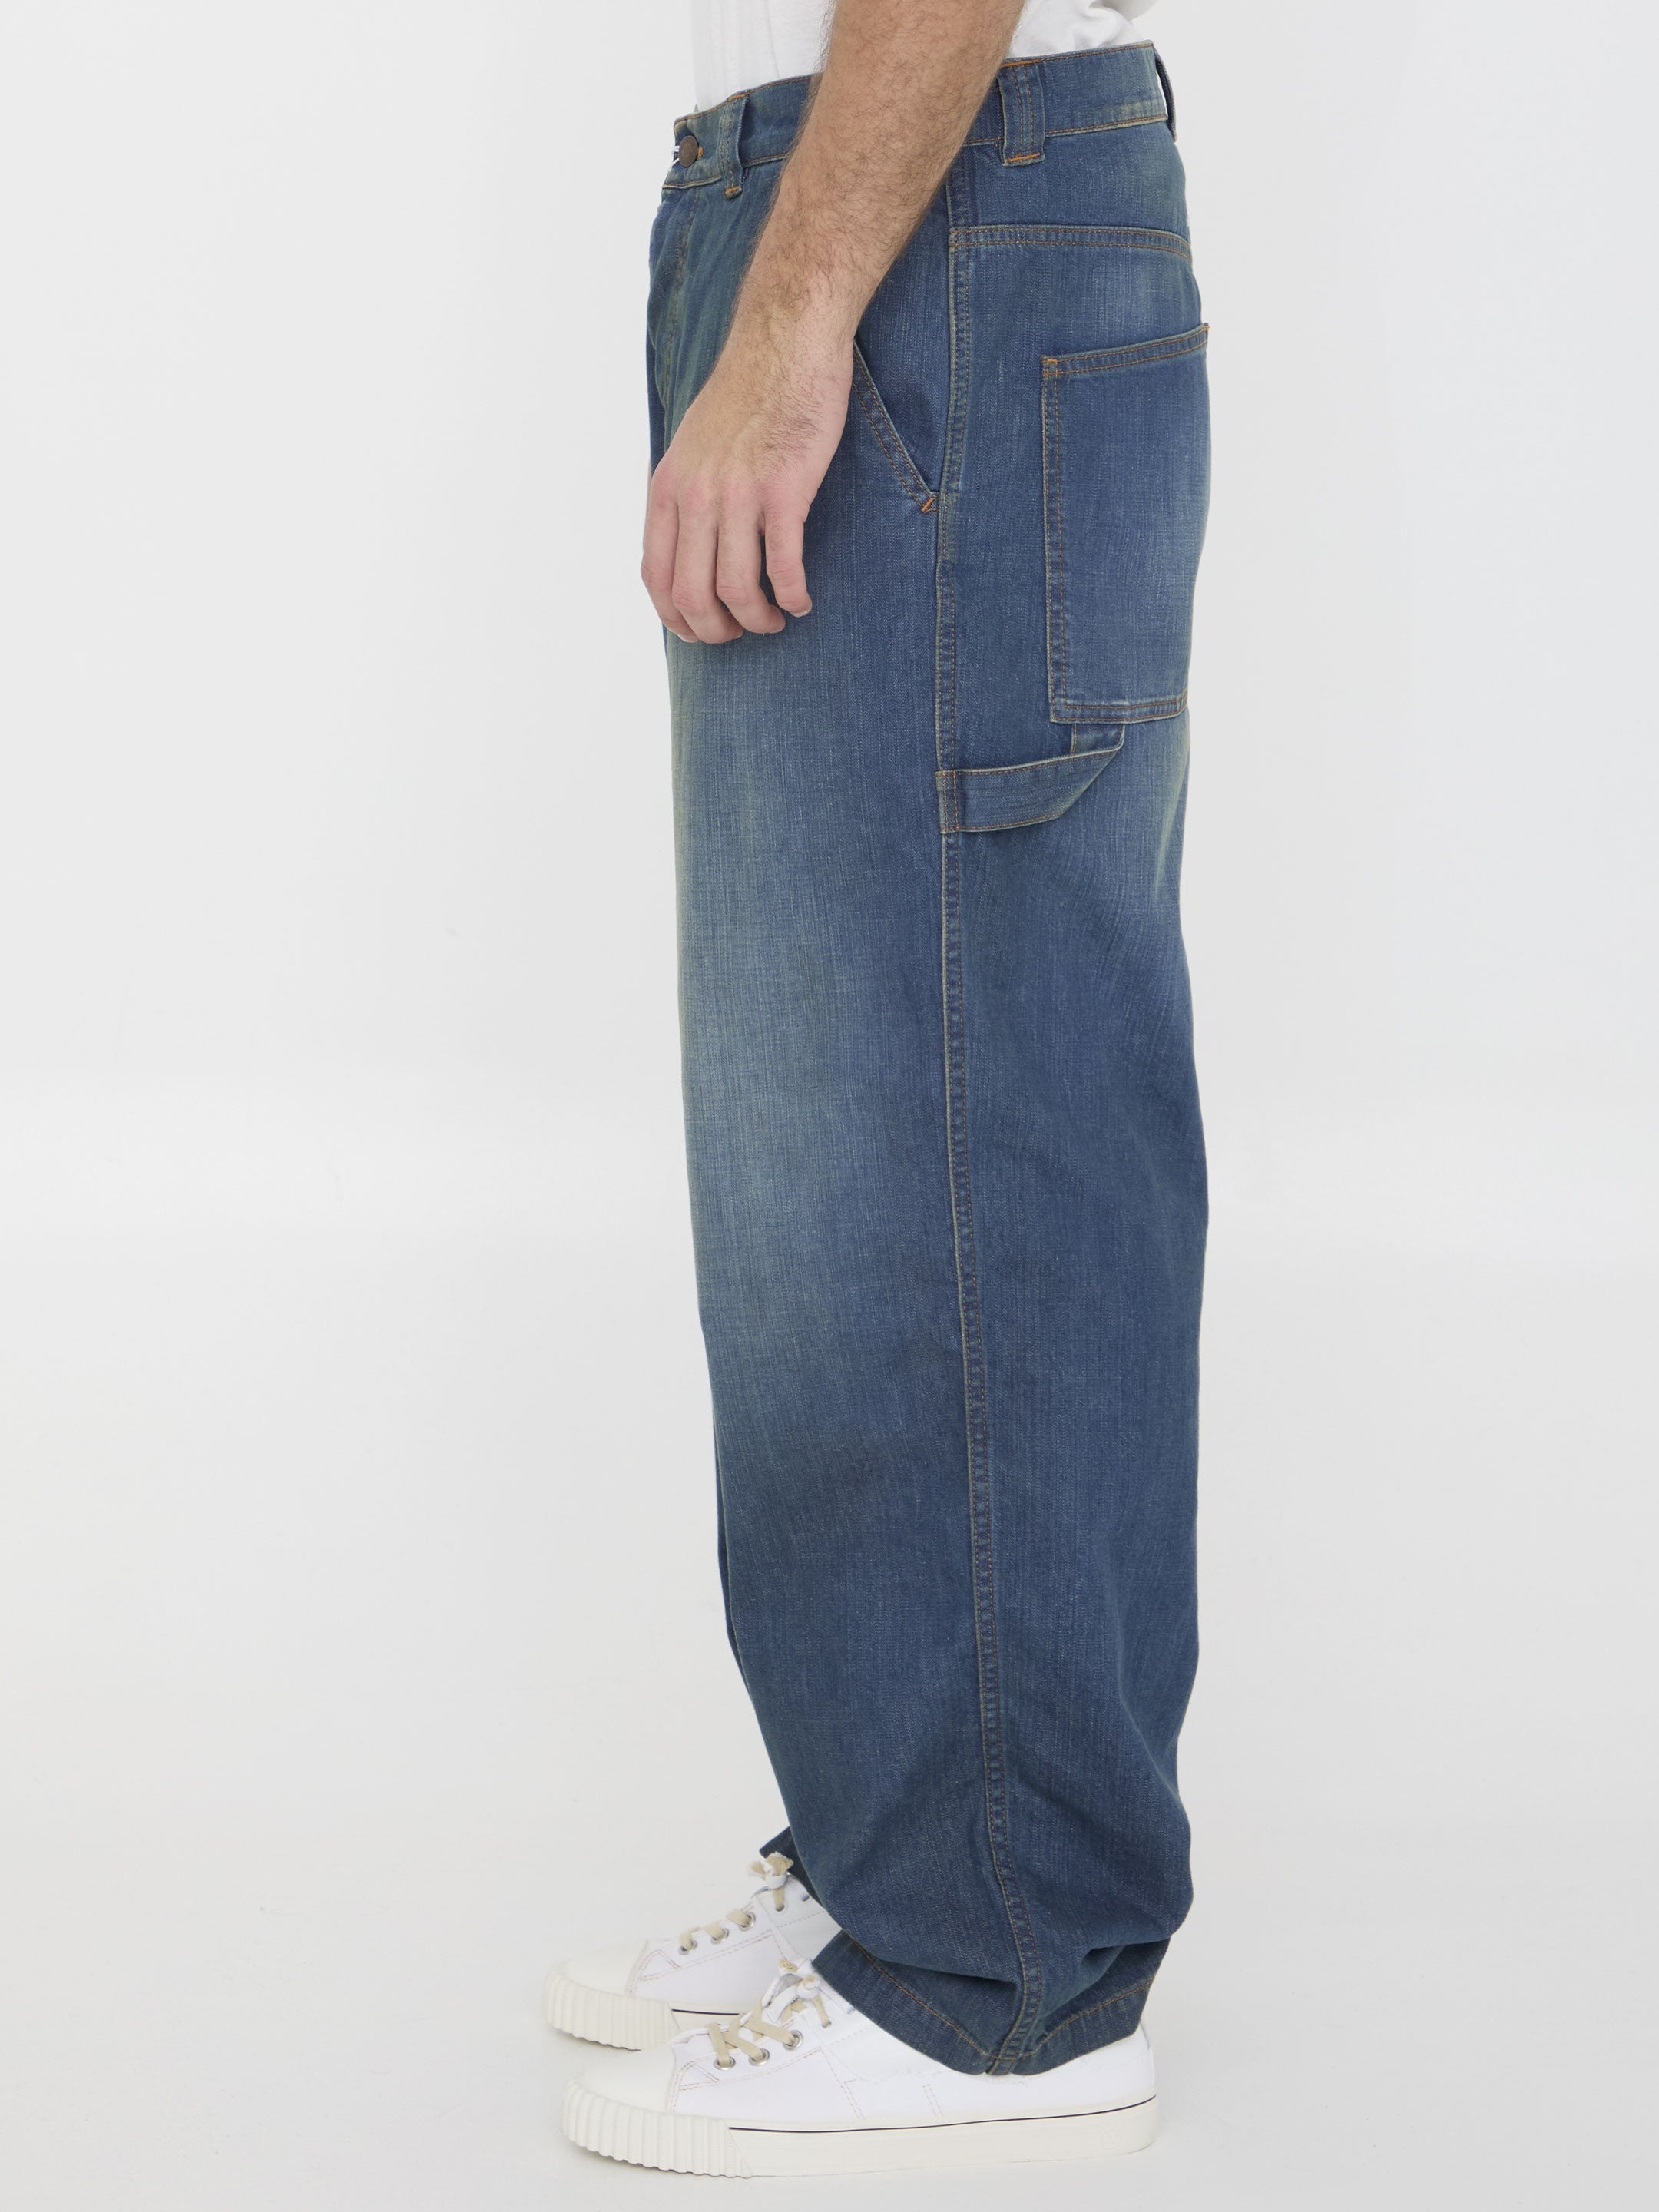 MAISON-MARGIELA-OUTLET-SALE-Americana-wash-jeans-Jeans-ARCHIVE-COLLECTION-3.jpg